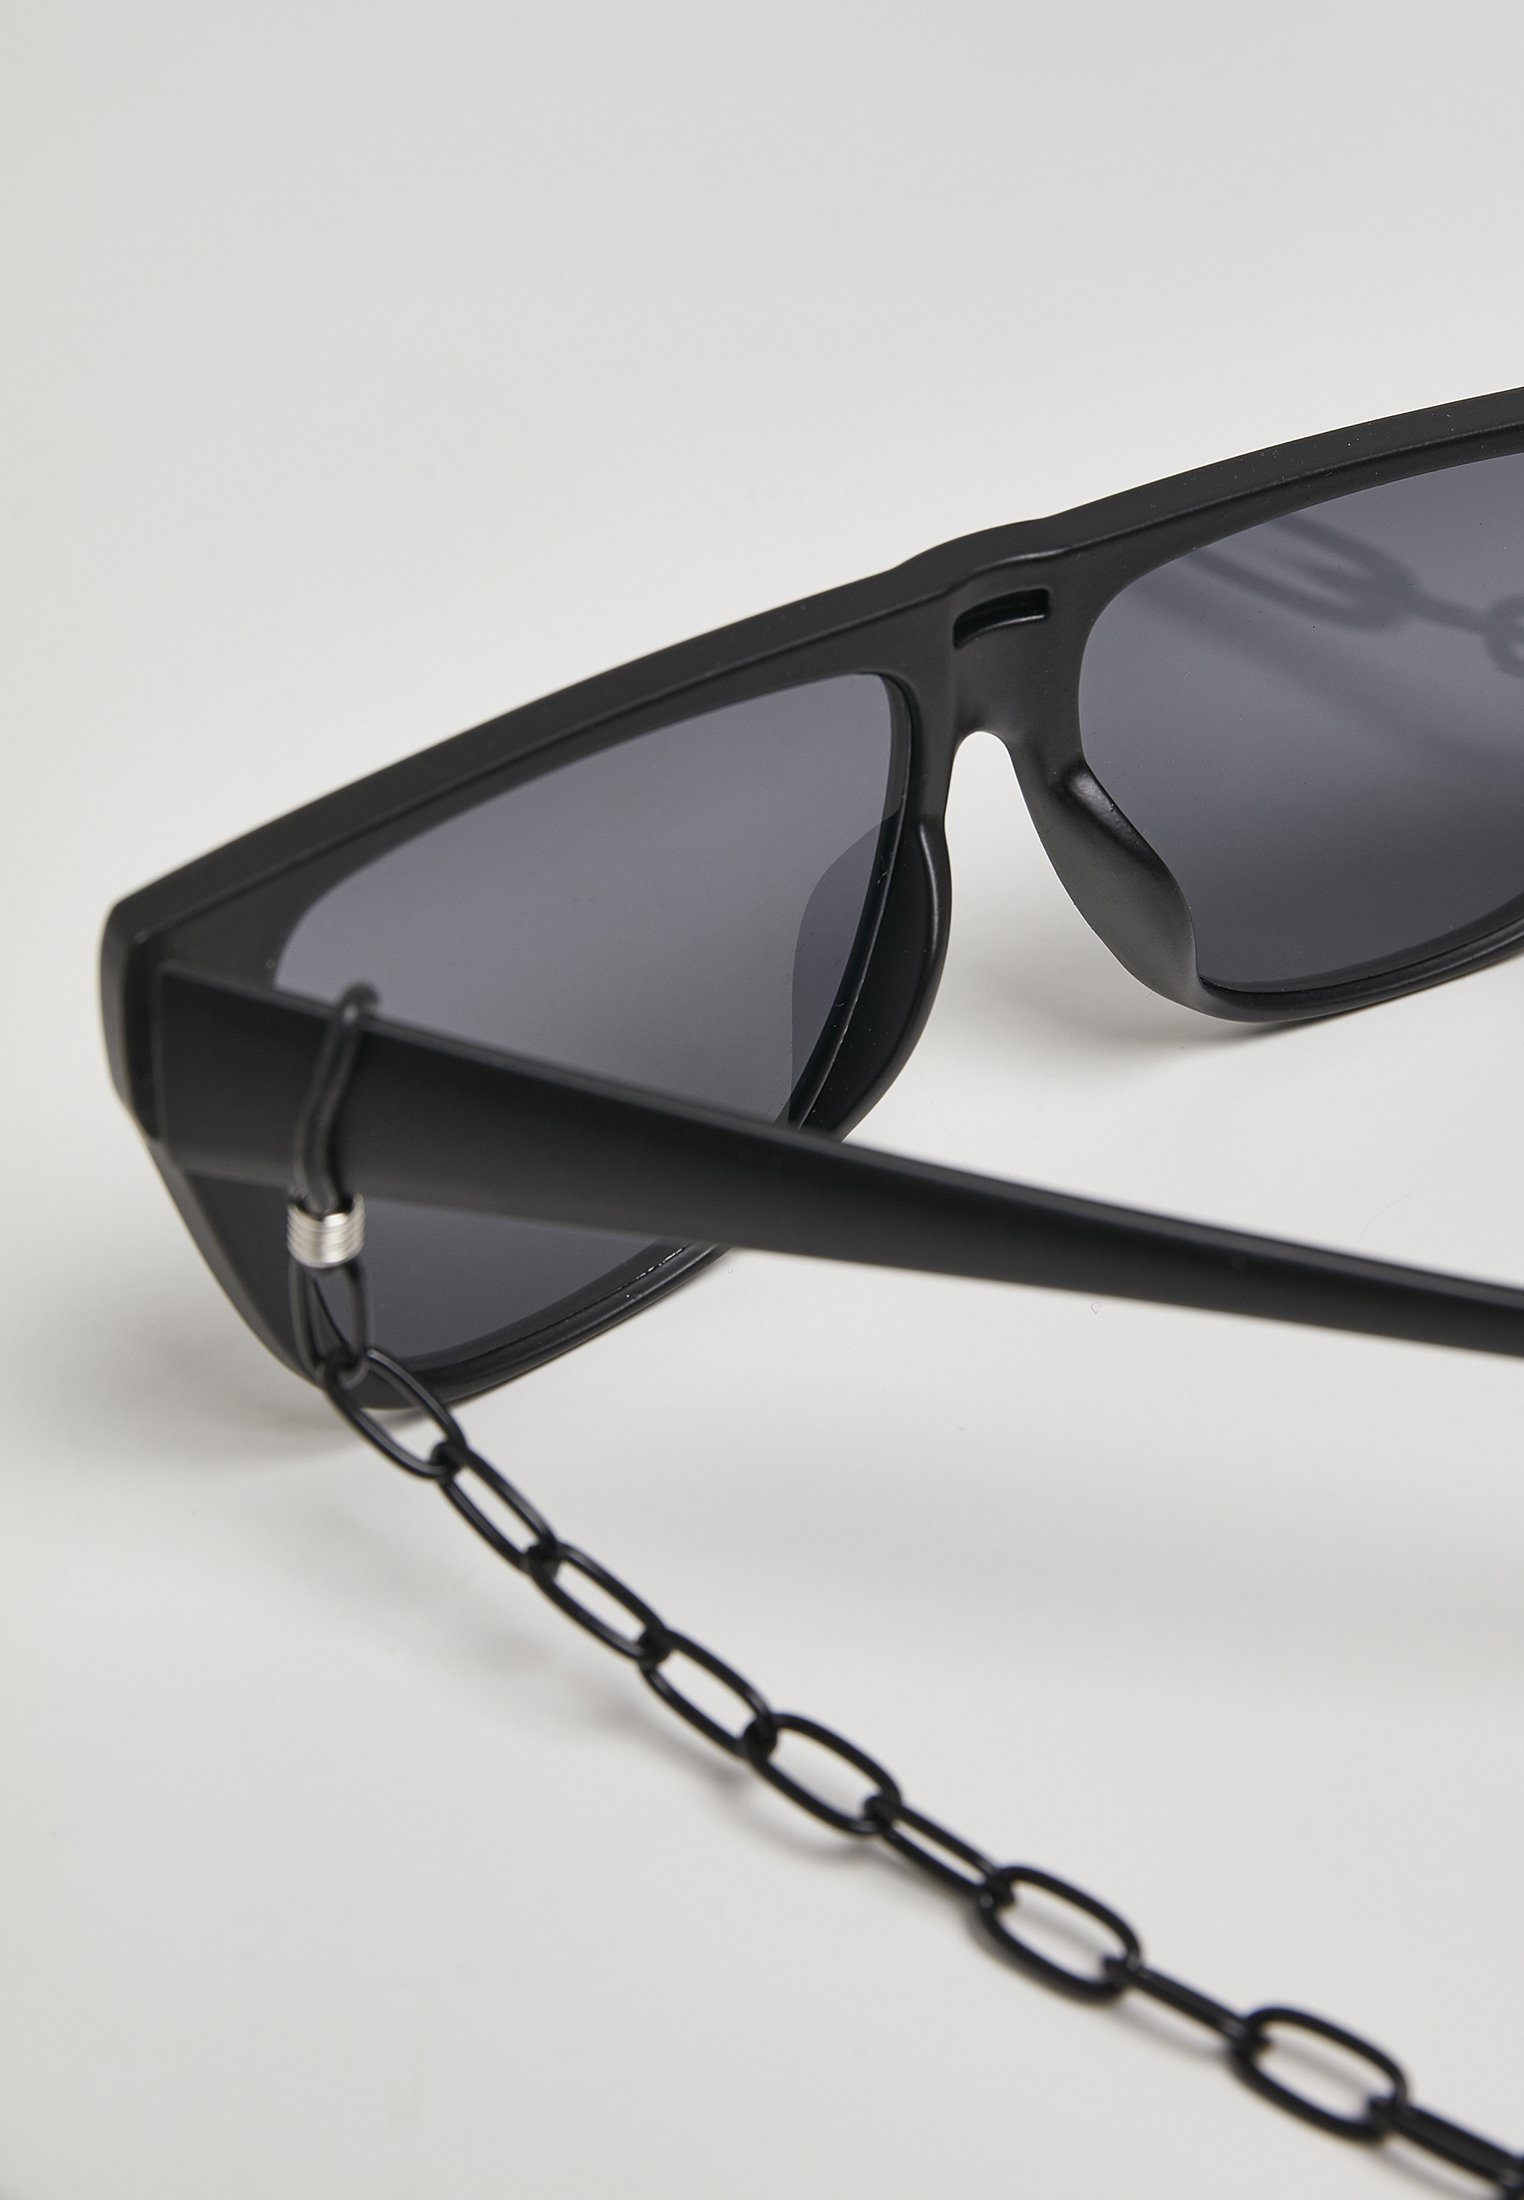 Chain 108 URBAN Sunglasses Sonnenbrille Accessoires CLASSICS Visor